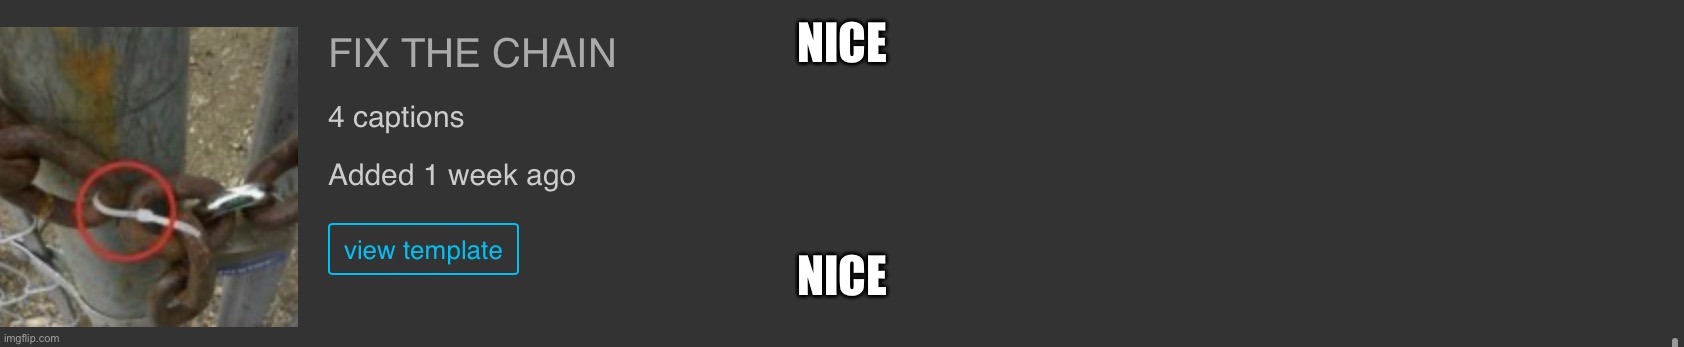  NICE; NICE | made w/ Imgflip meme maker